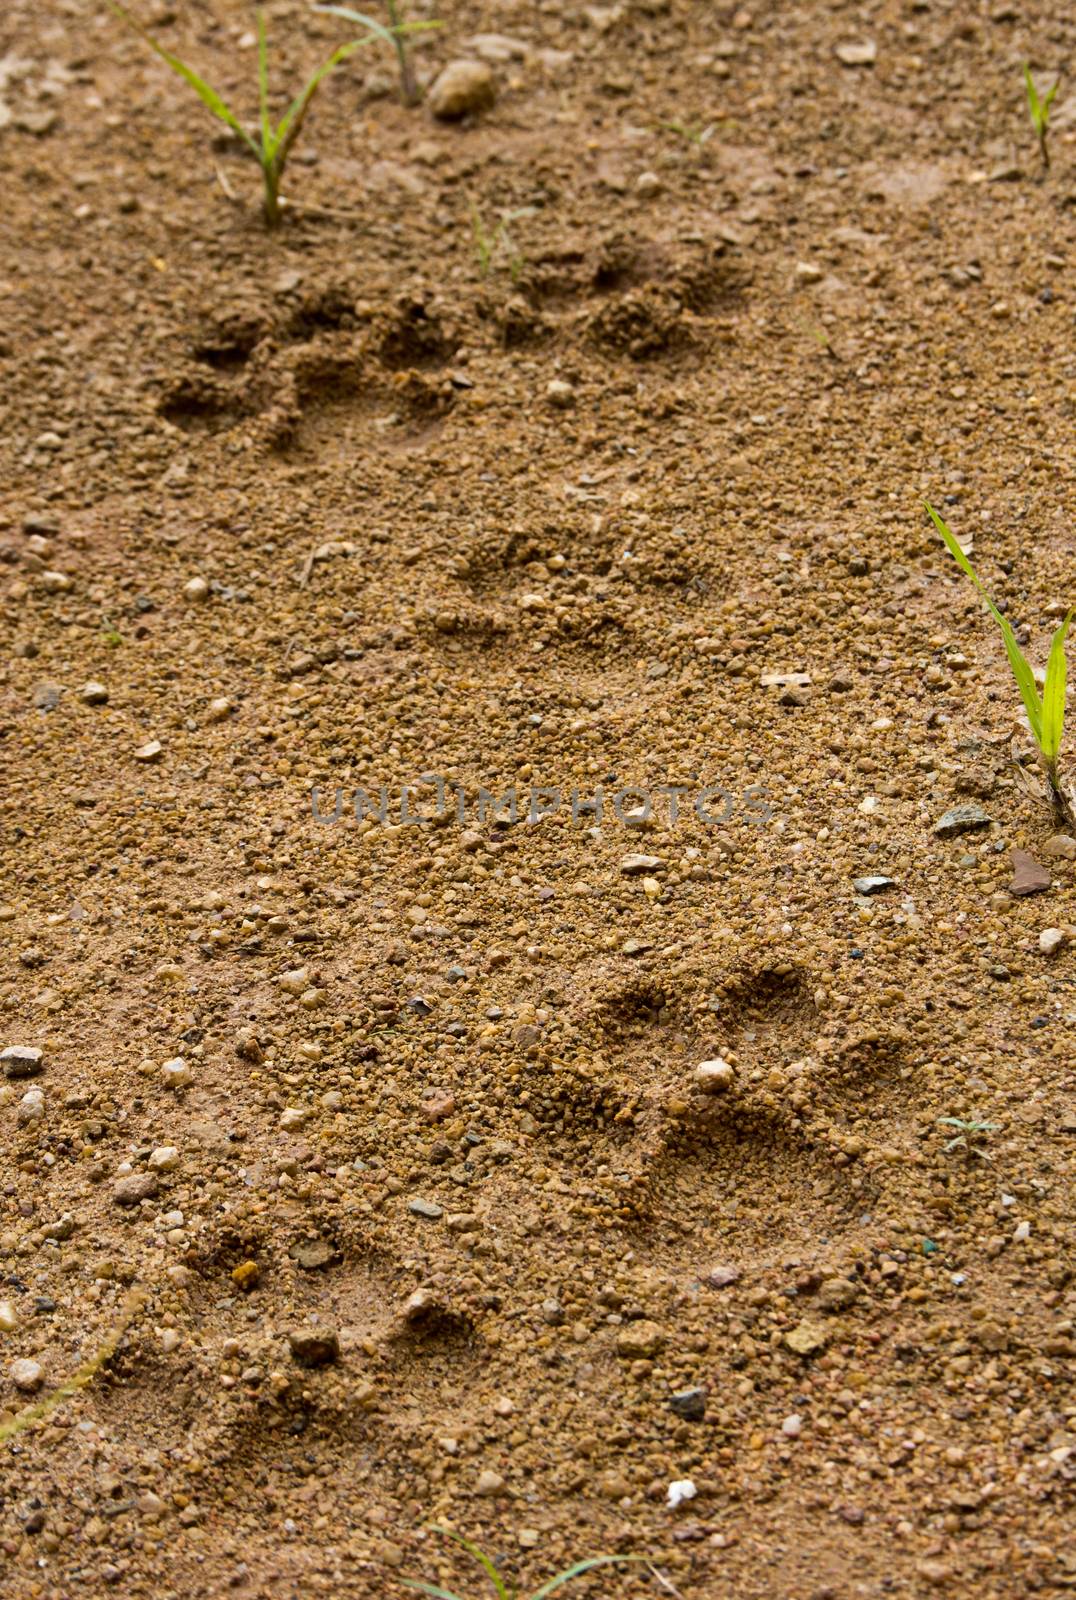 Dog footprint tread on soft soil ground